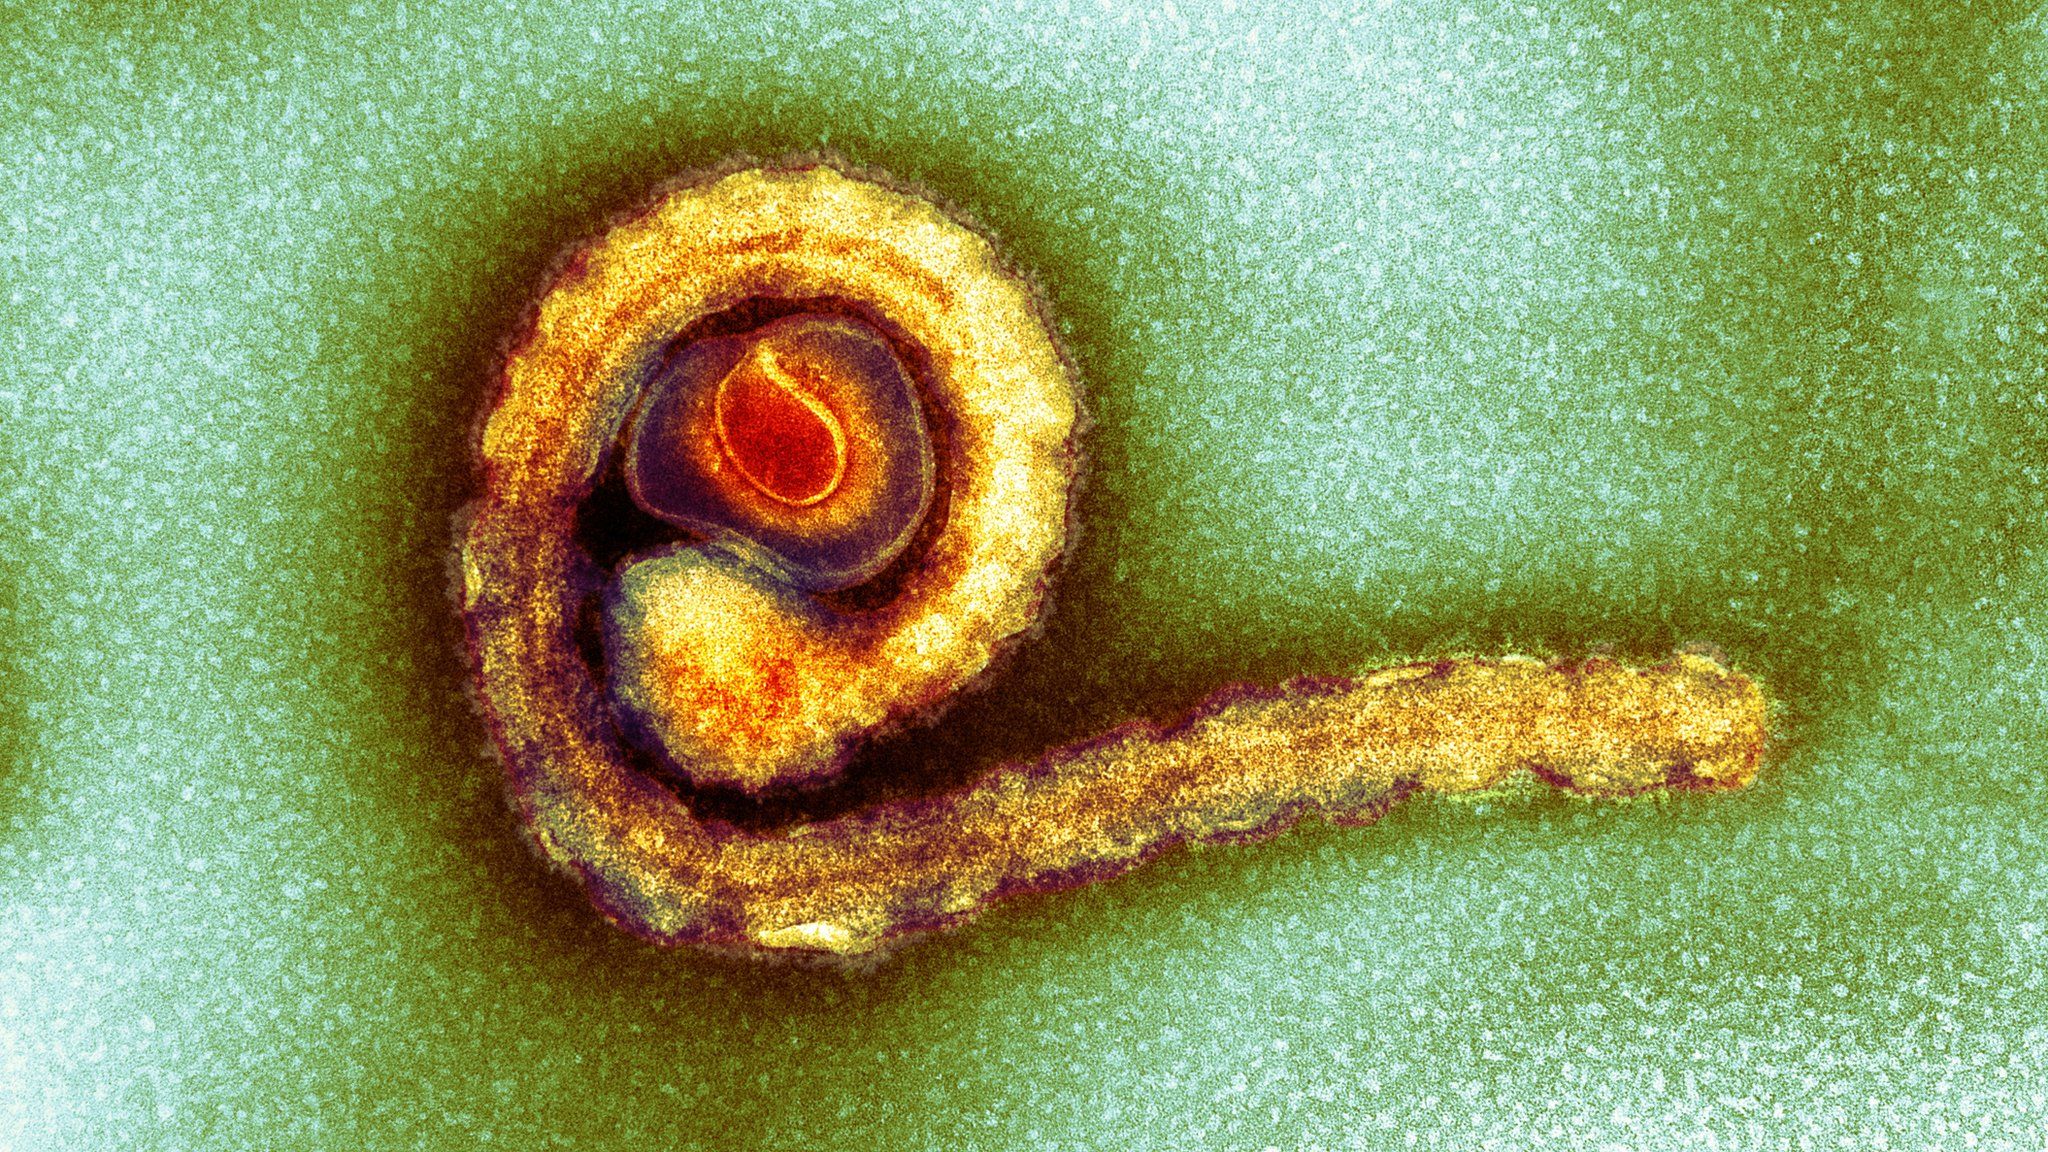 The Ebola virus was found to be present in Pauline Cafferkey's body